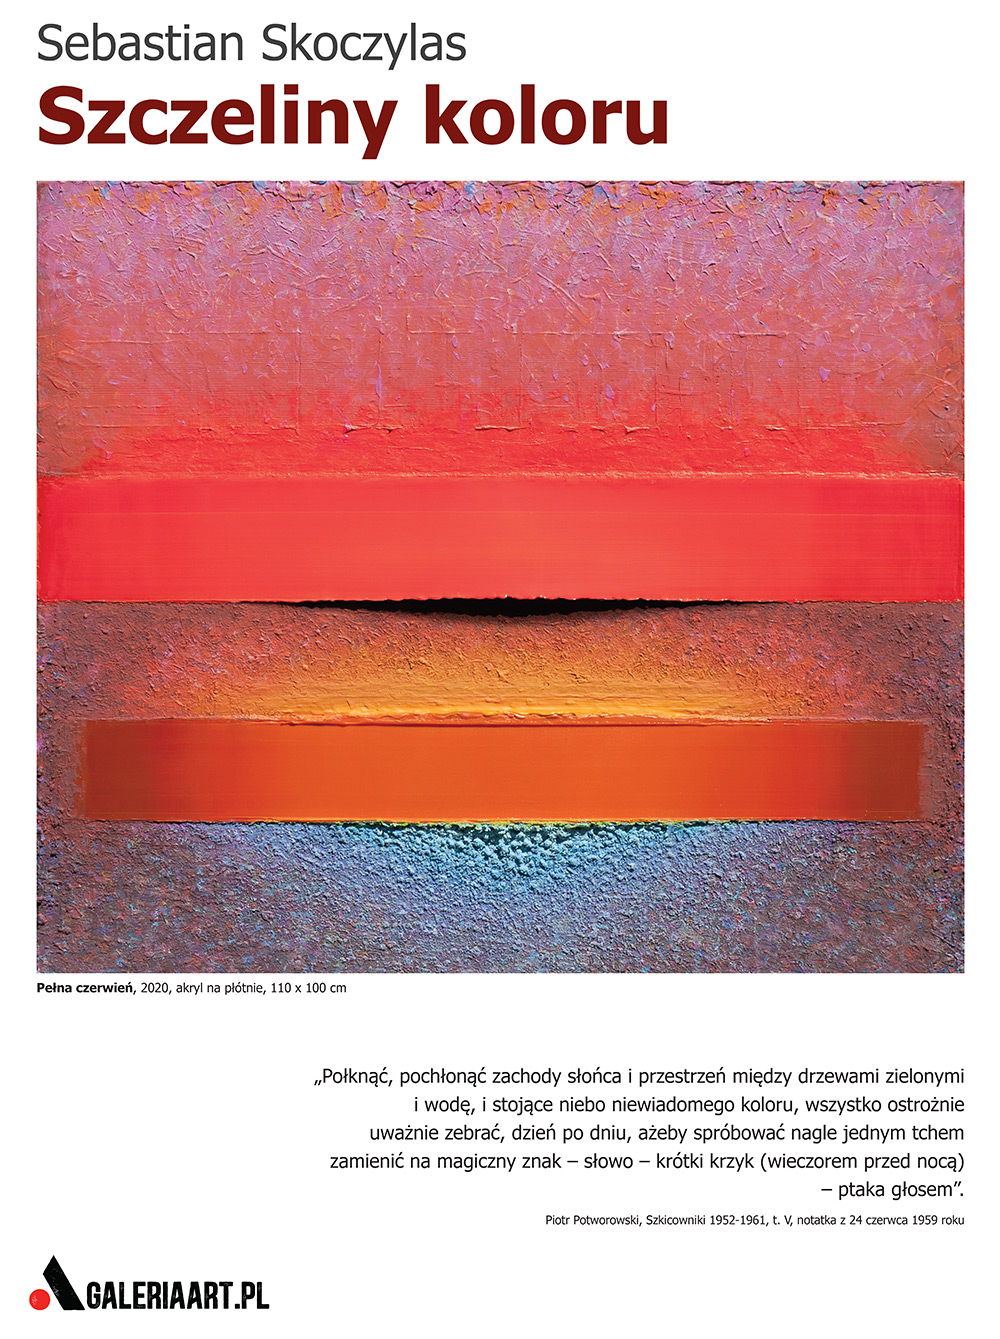 Sebastian Skoczylas. Crevices of Colour